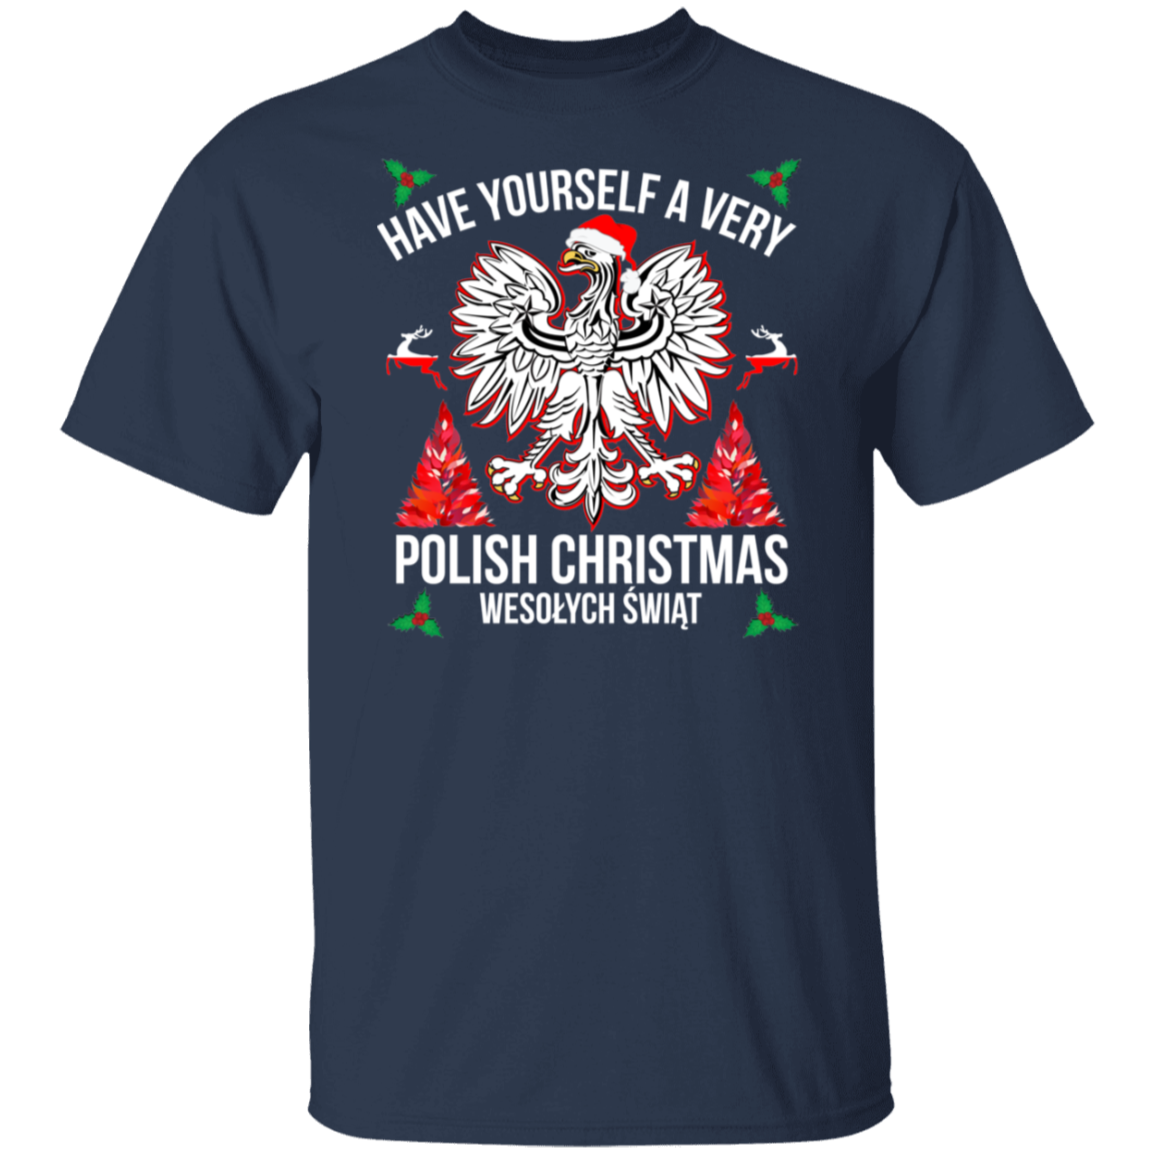 Have Yourself A Very Polish Christmas Apparel CustomCat G500 5.3 oz. T-Shirt Navy S